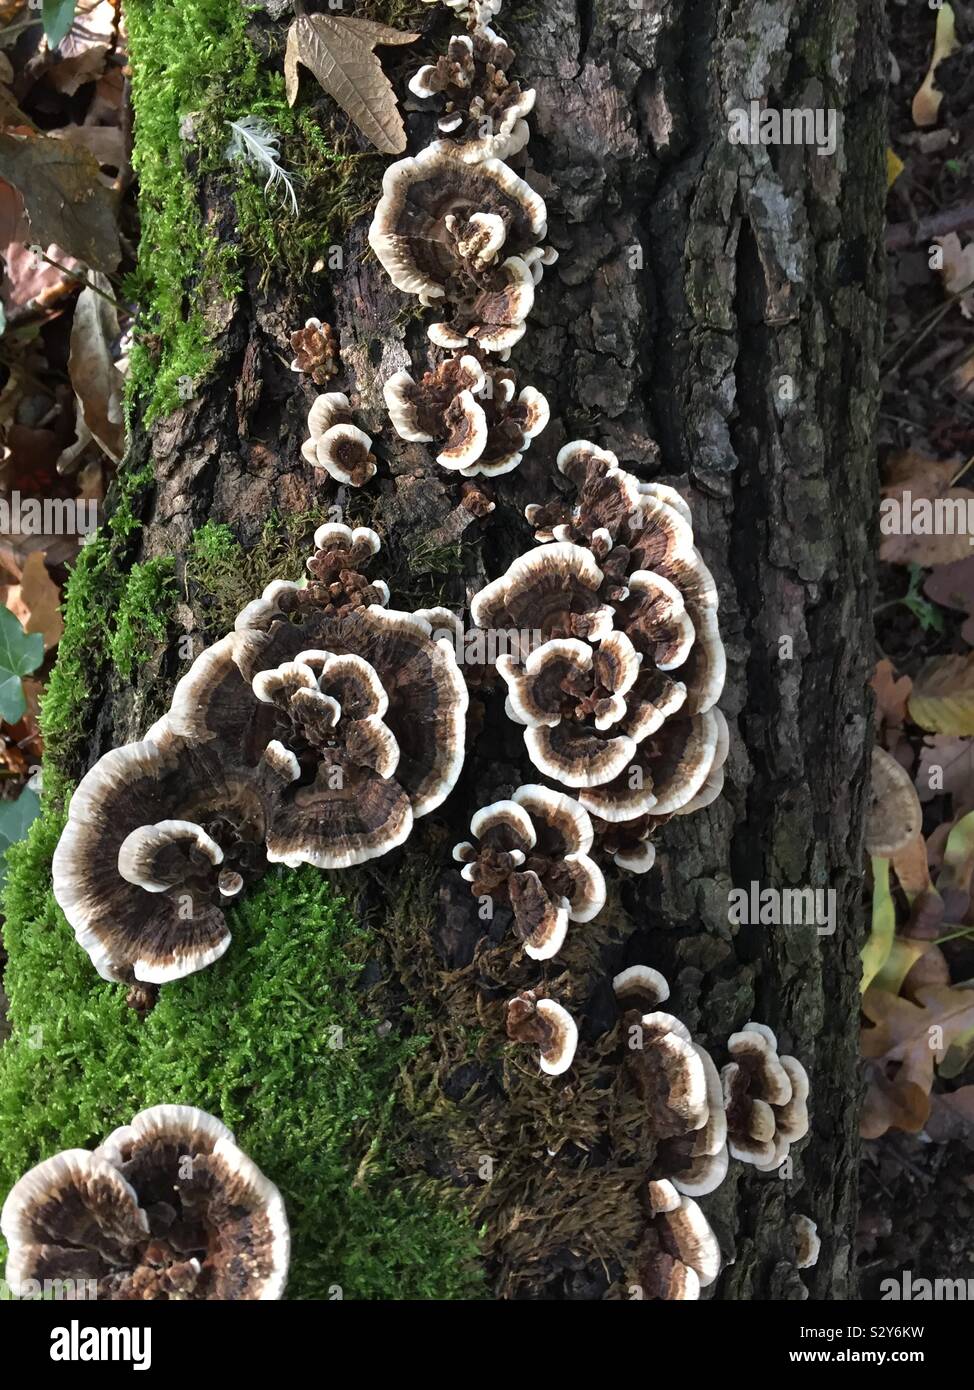 Turkey tail mushroom in brown and white on green moss. Trametes versicolor.  Coriolus versicolor.  Polyporus versicolor. Stock Photo